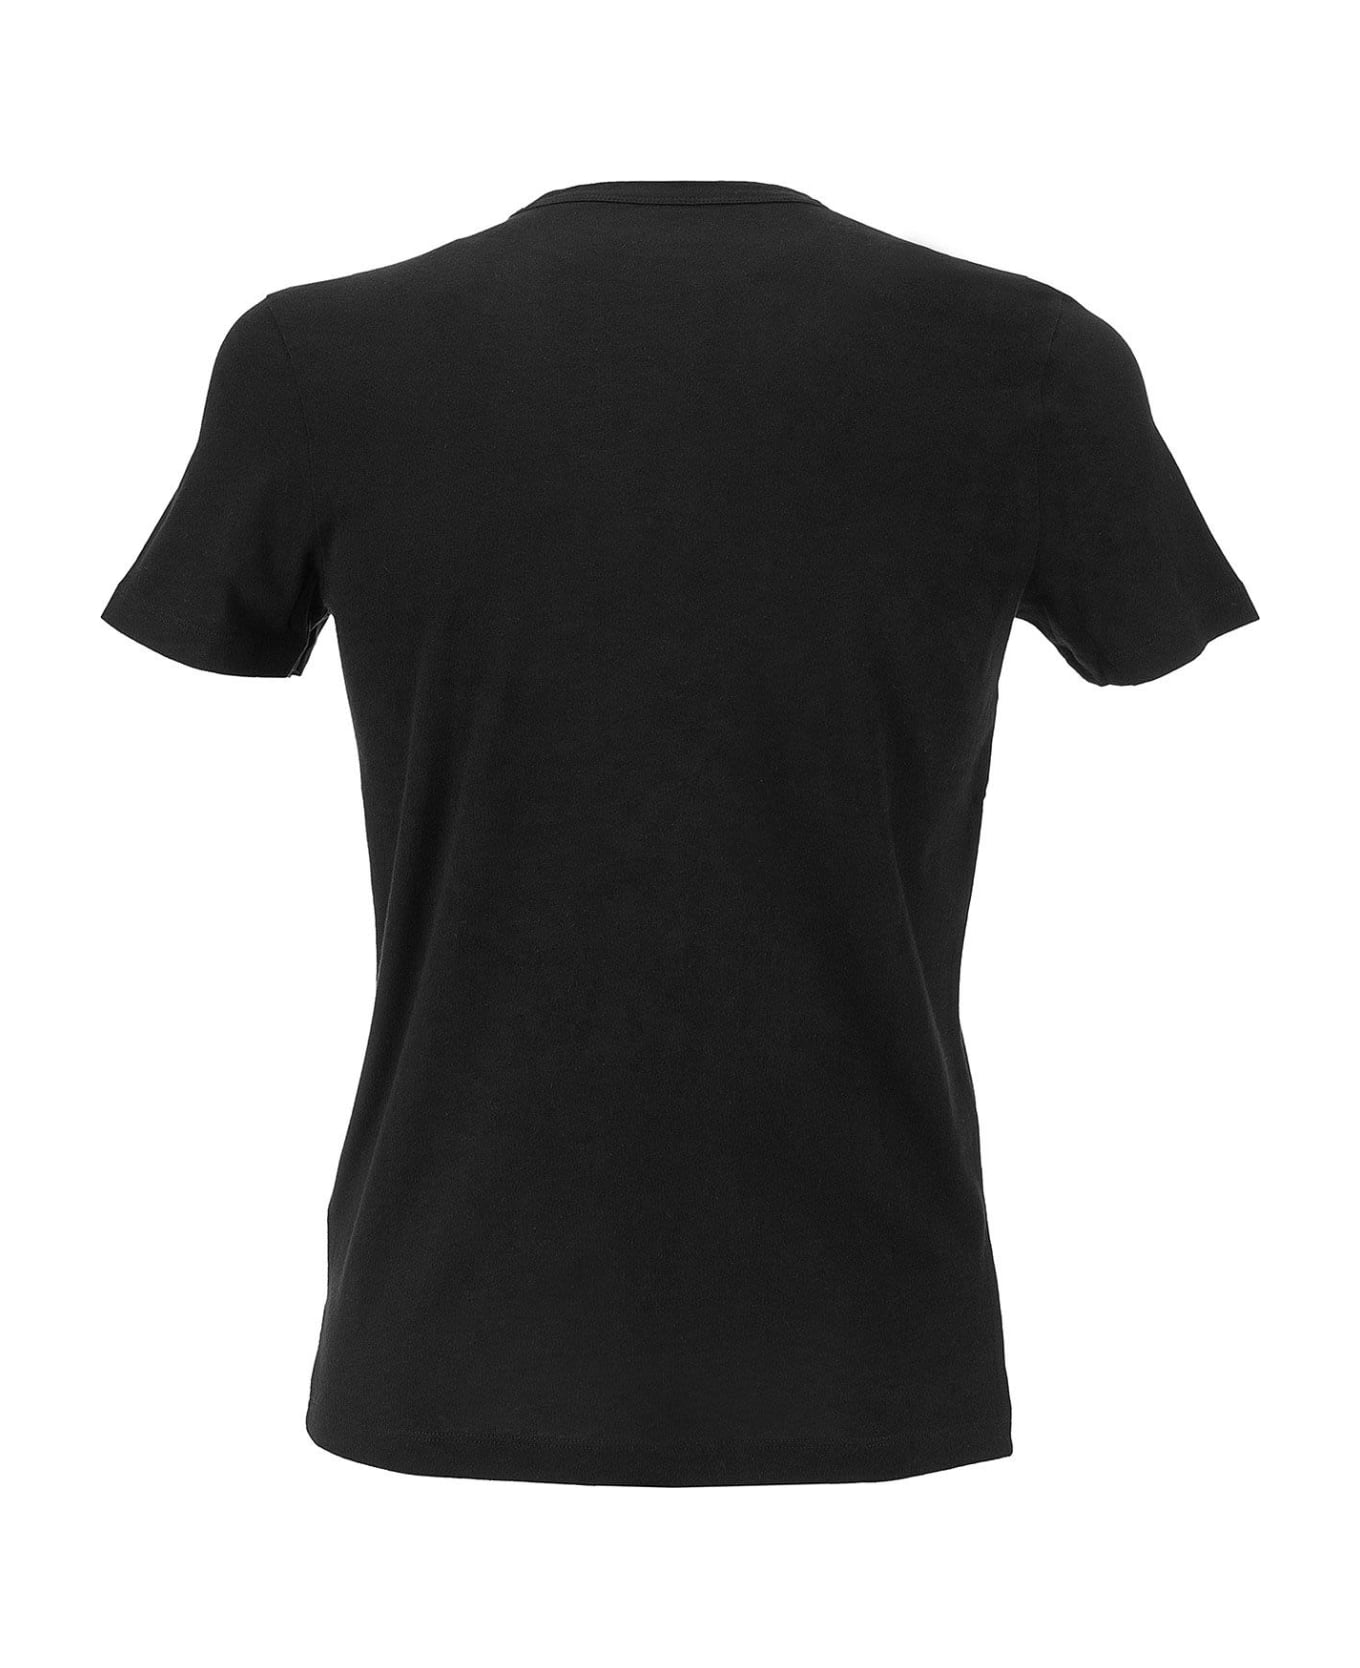 Majestic Filatures Black Crew Neck T-shirt In Silk Touch Cotton - Black シャツ